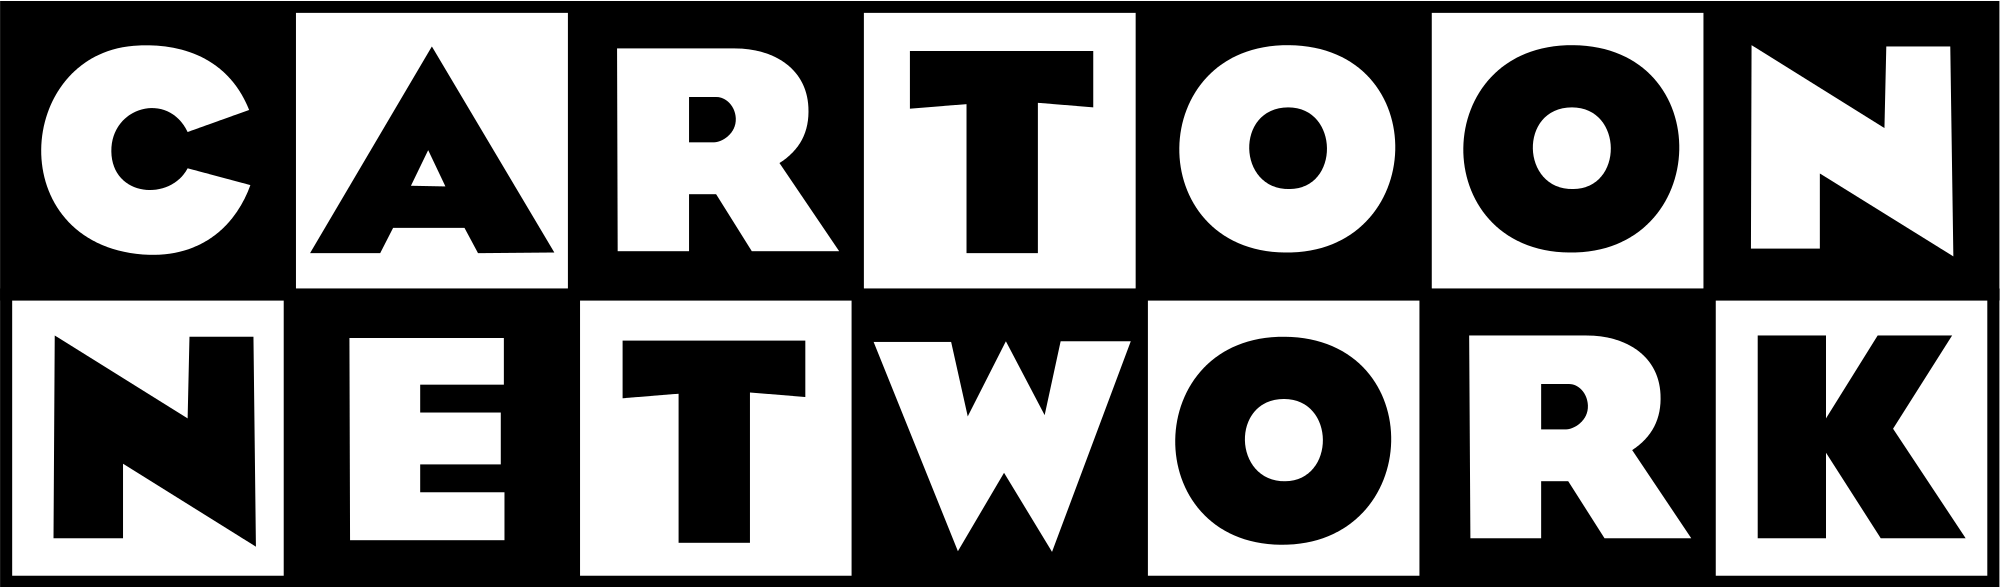 Cartoon Network New Logo - File:Cartoon Network 1992 logo.svg - Wikimedia Commons